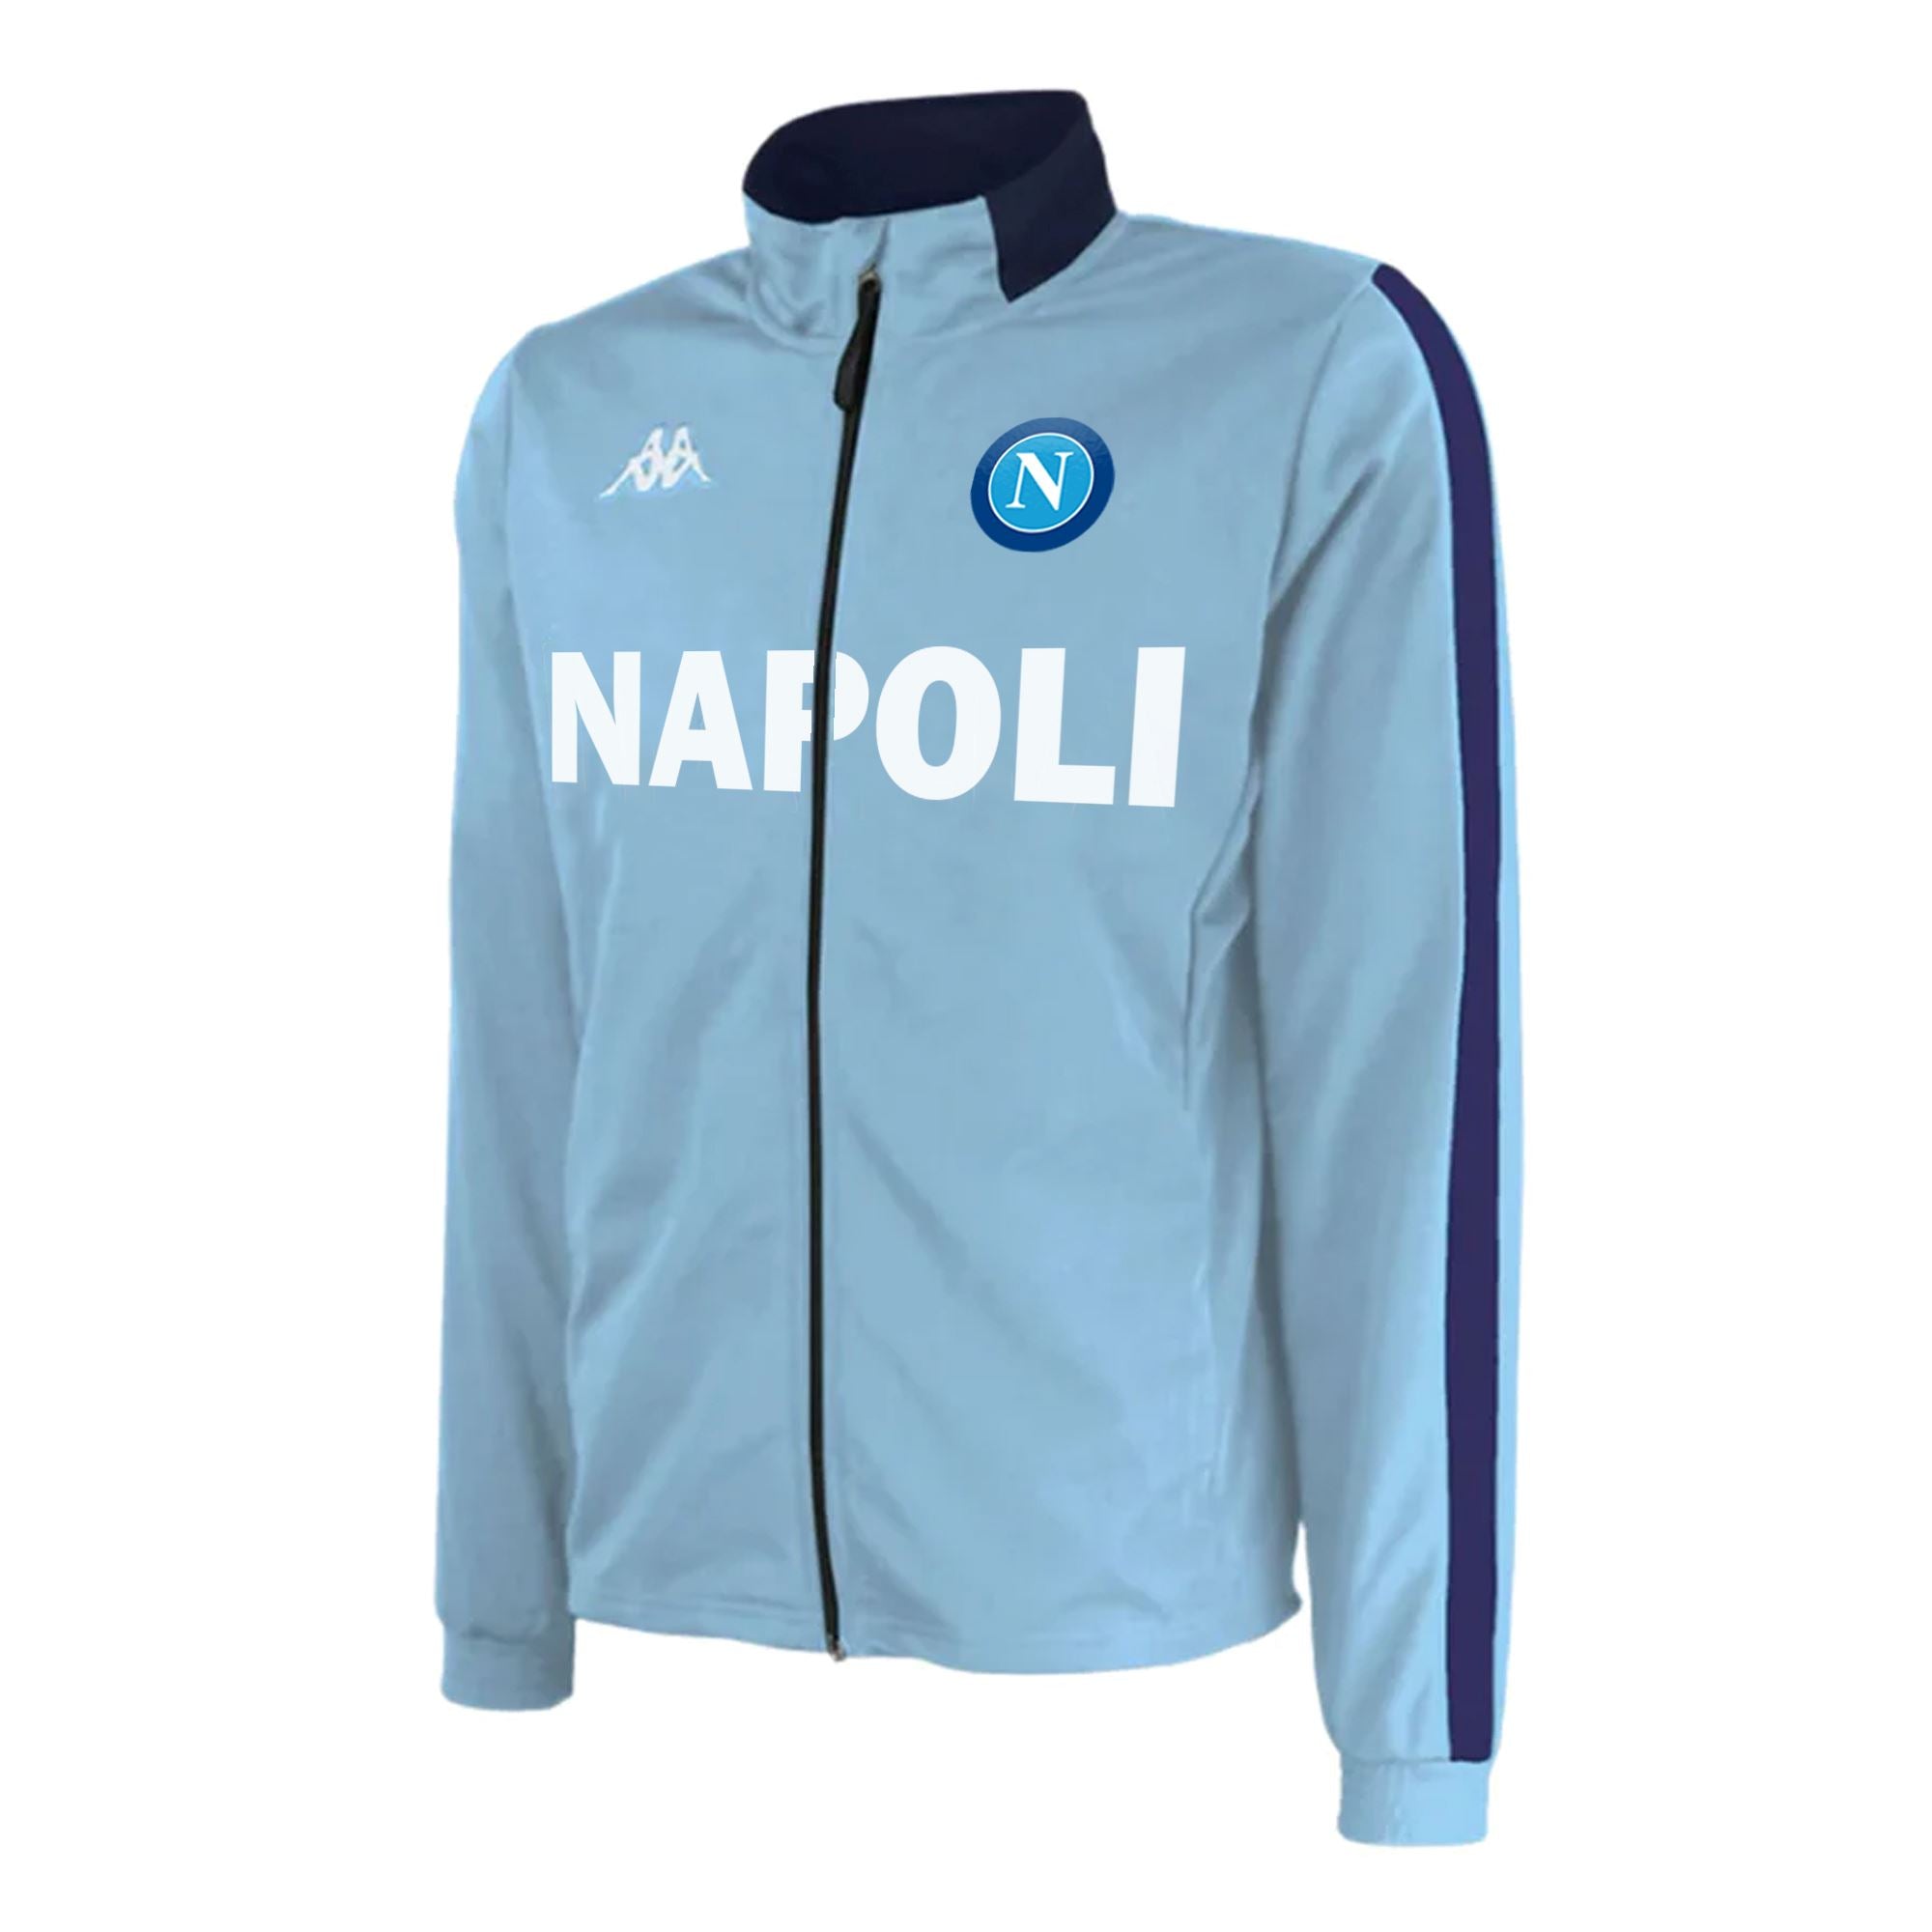 Kappa Sport Napoli Salcito Full Zip Jacket | Kappa Napoli Jacket